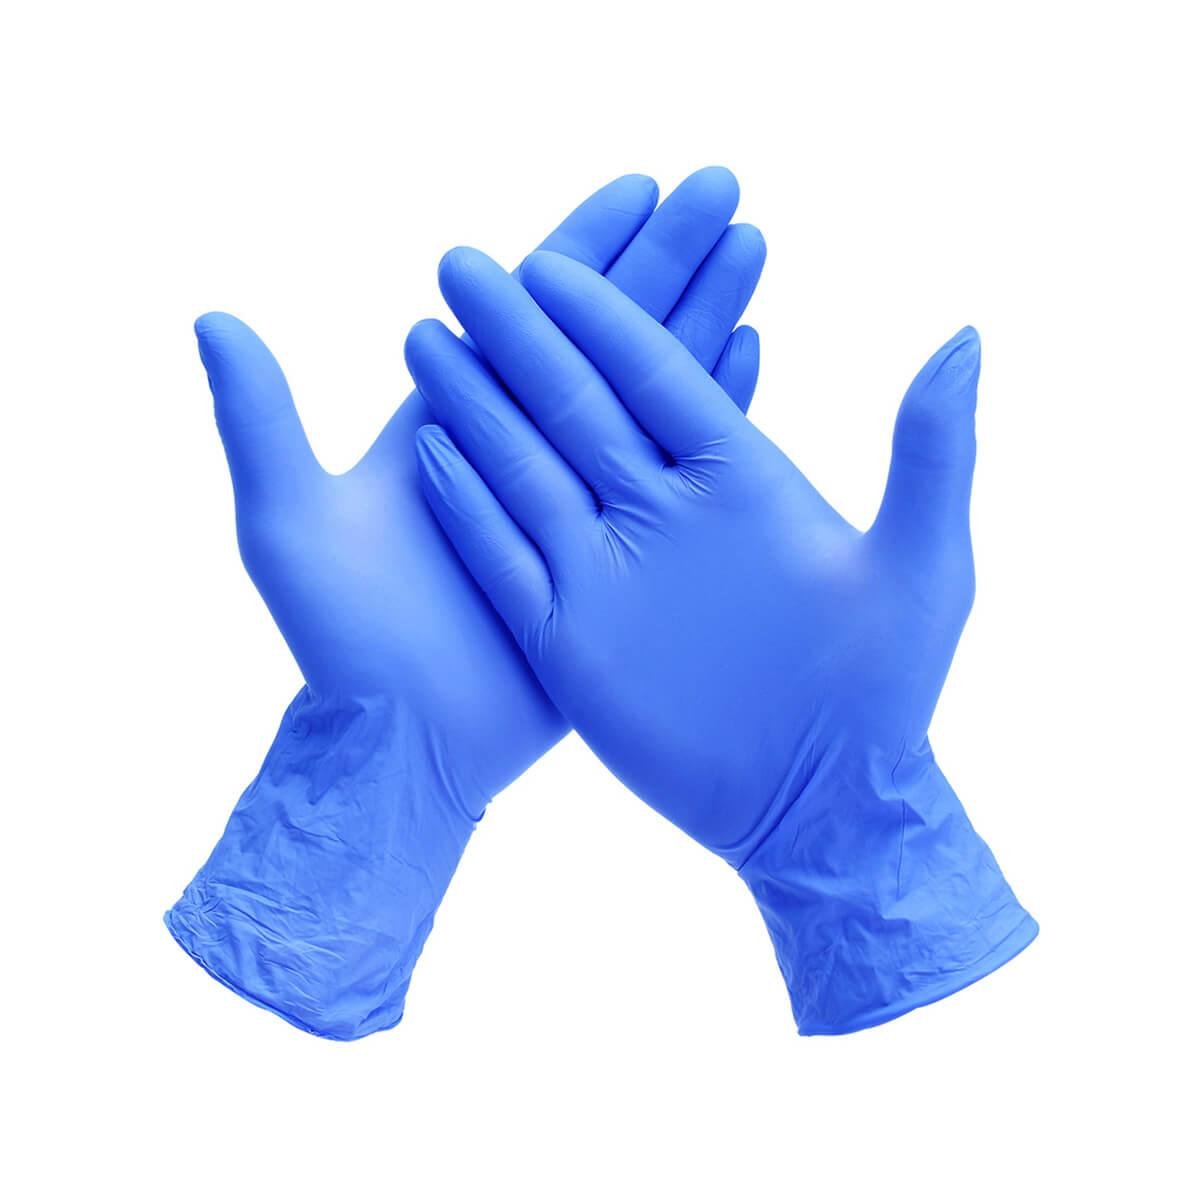 Powder free disposable nitrile glove